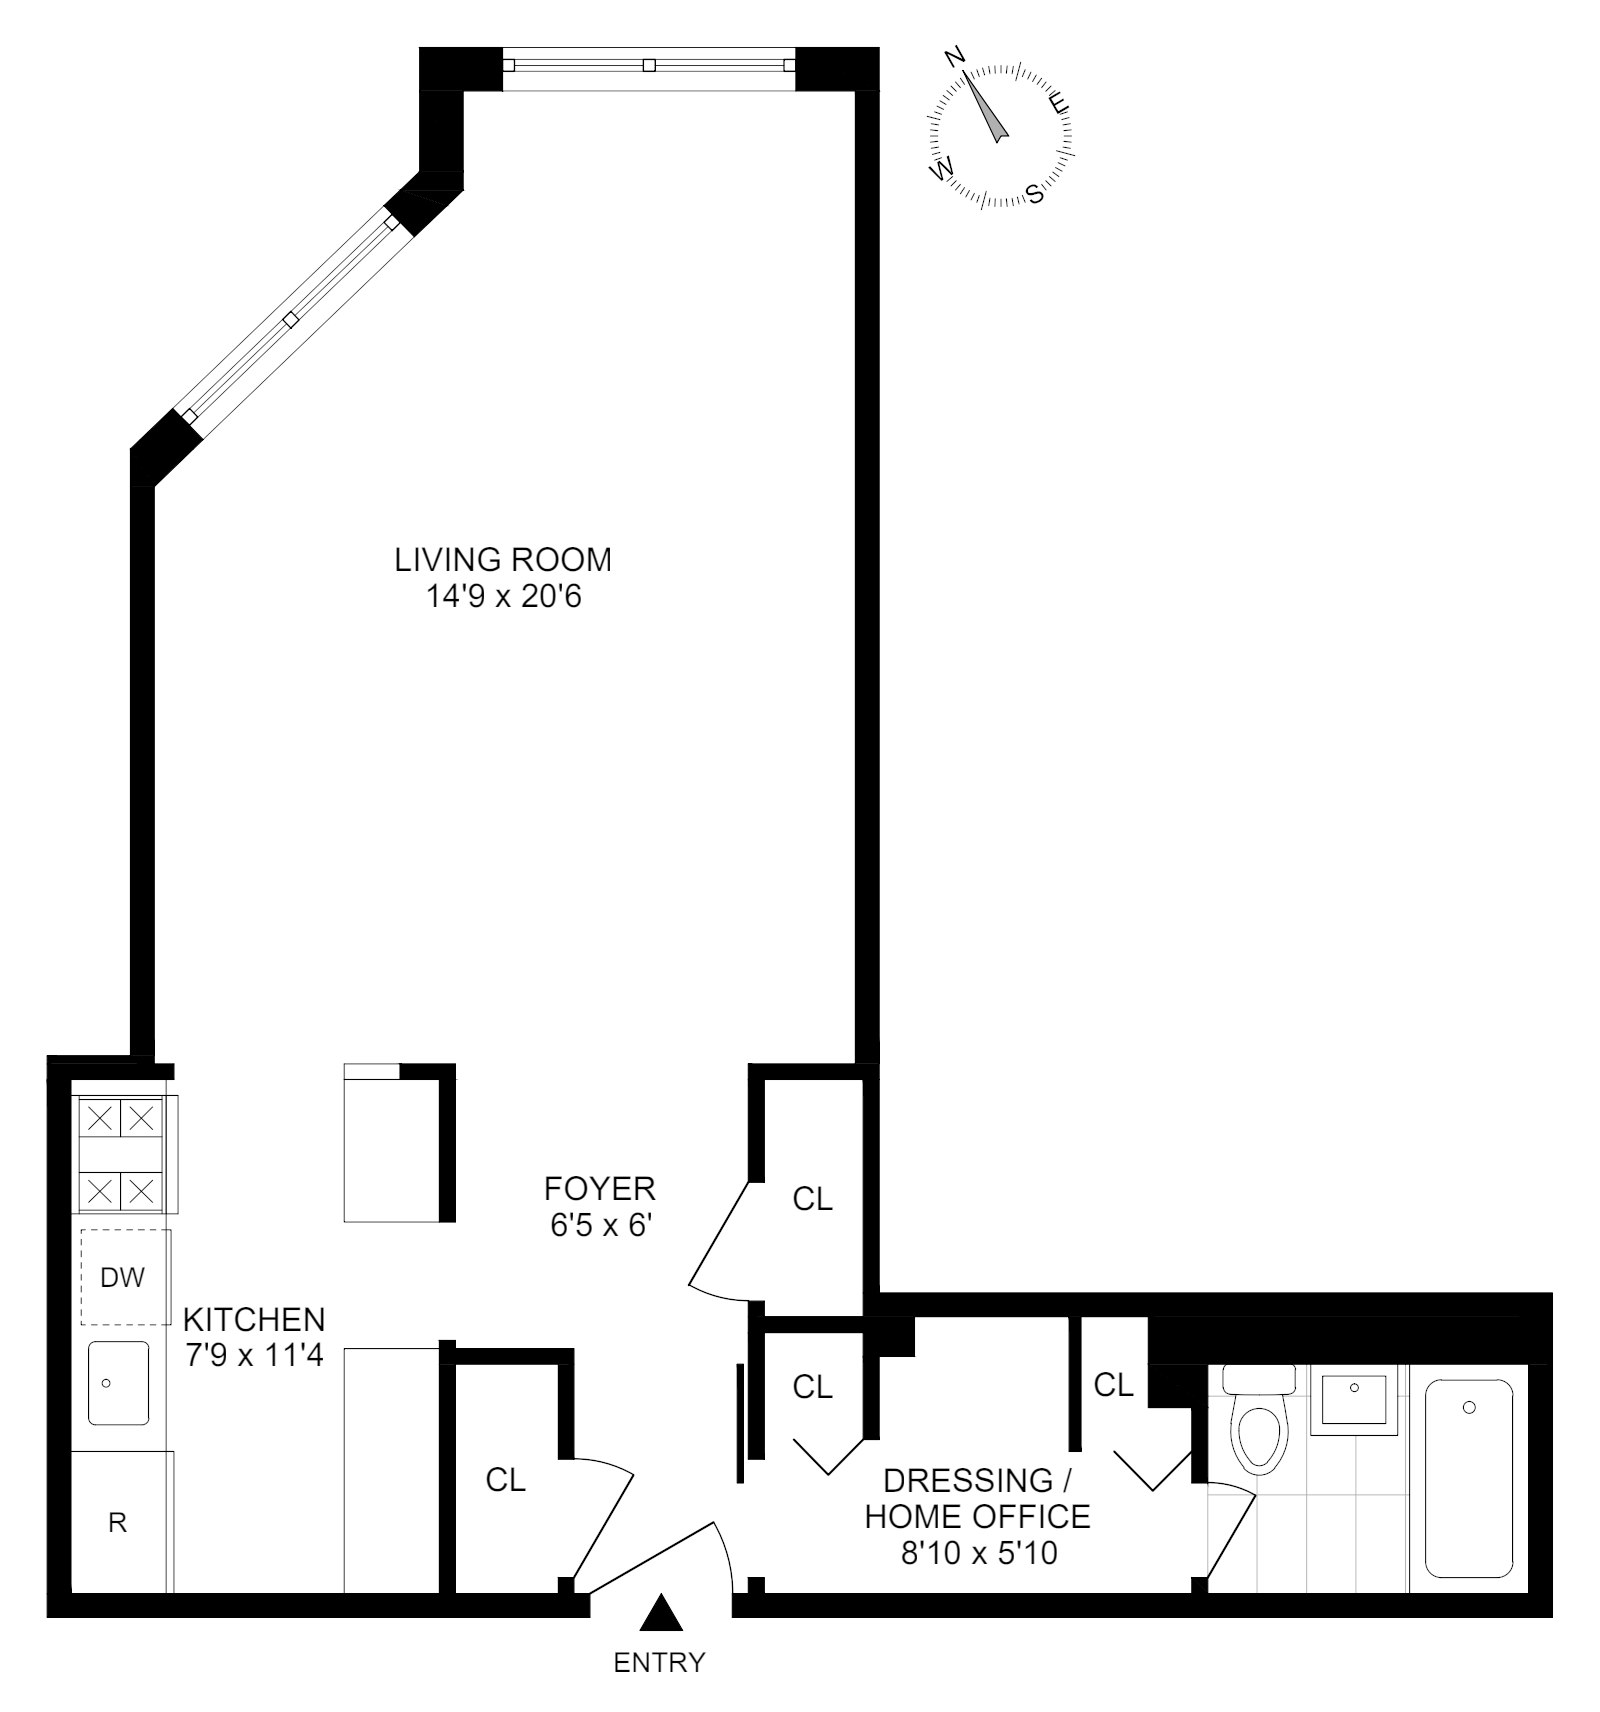 Floorplan for 155 West 68th Street, 518